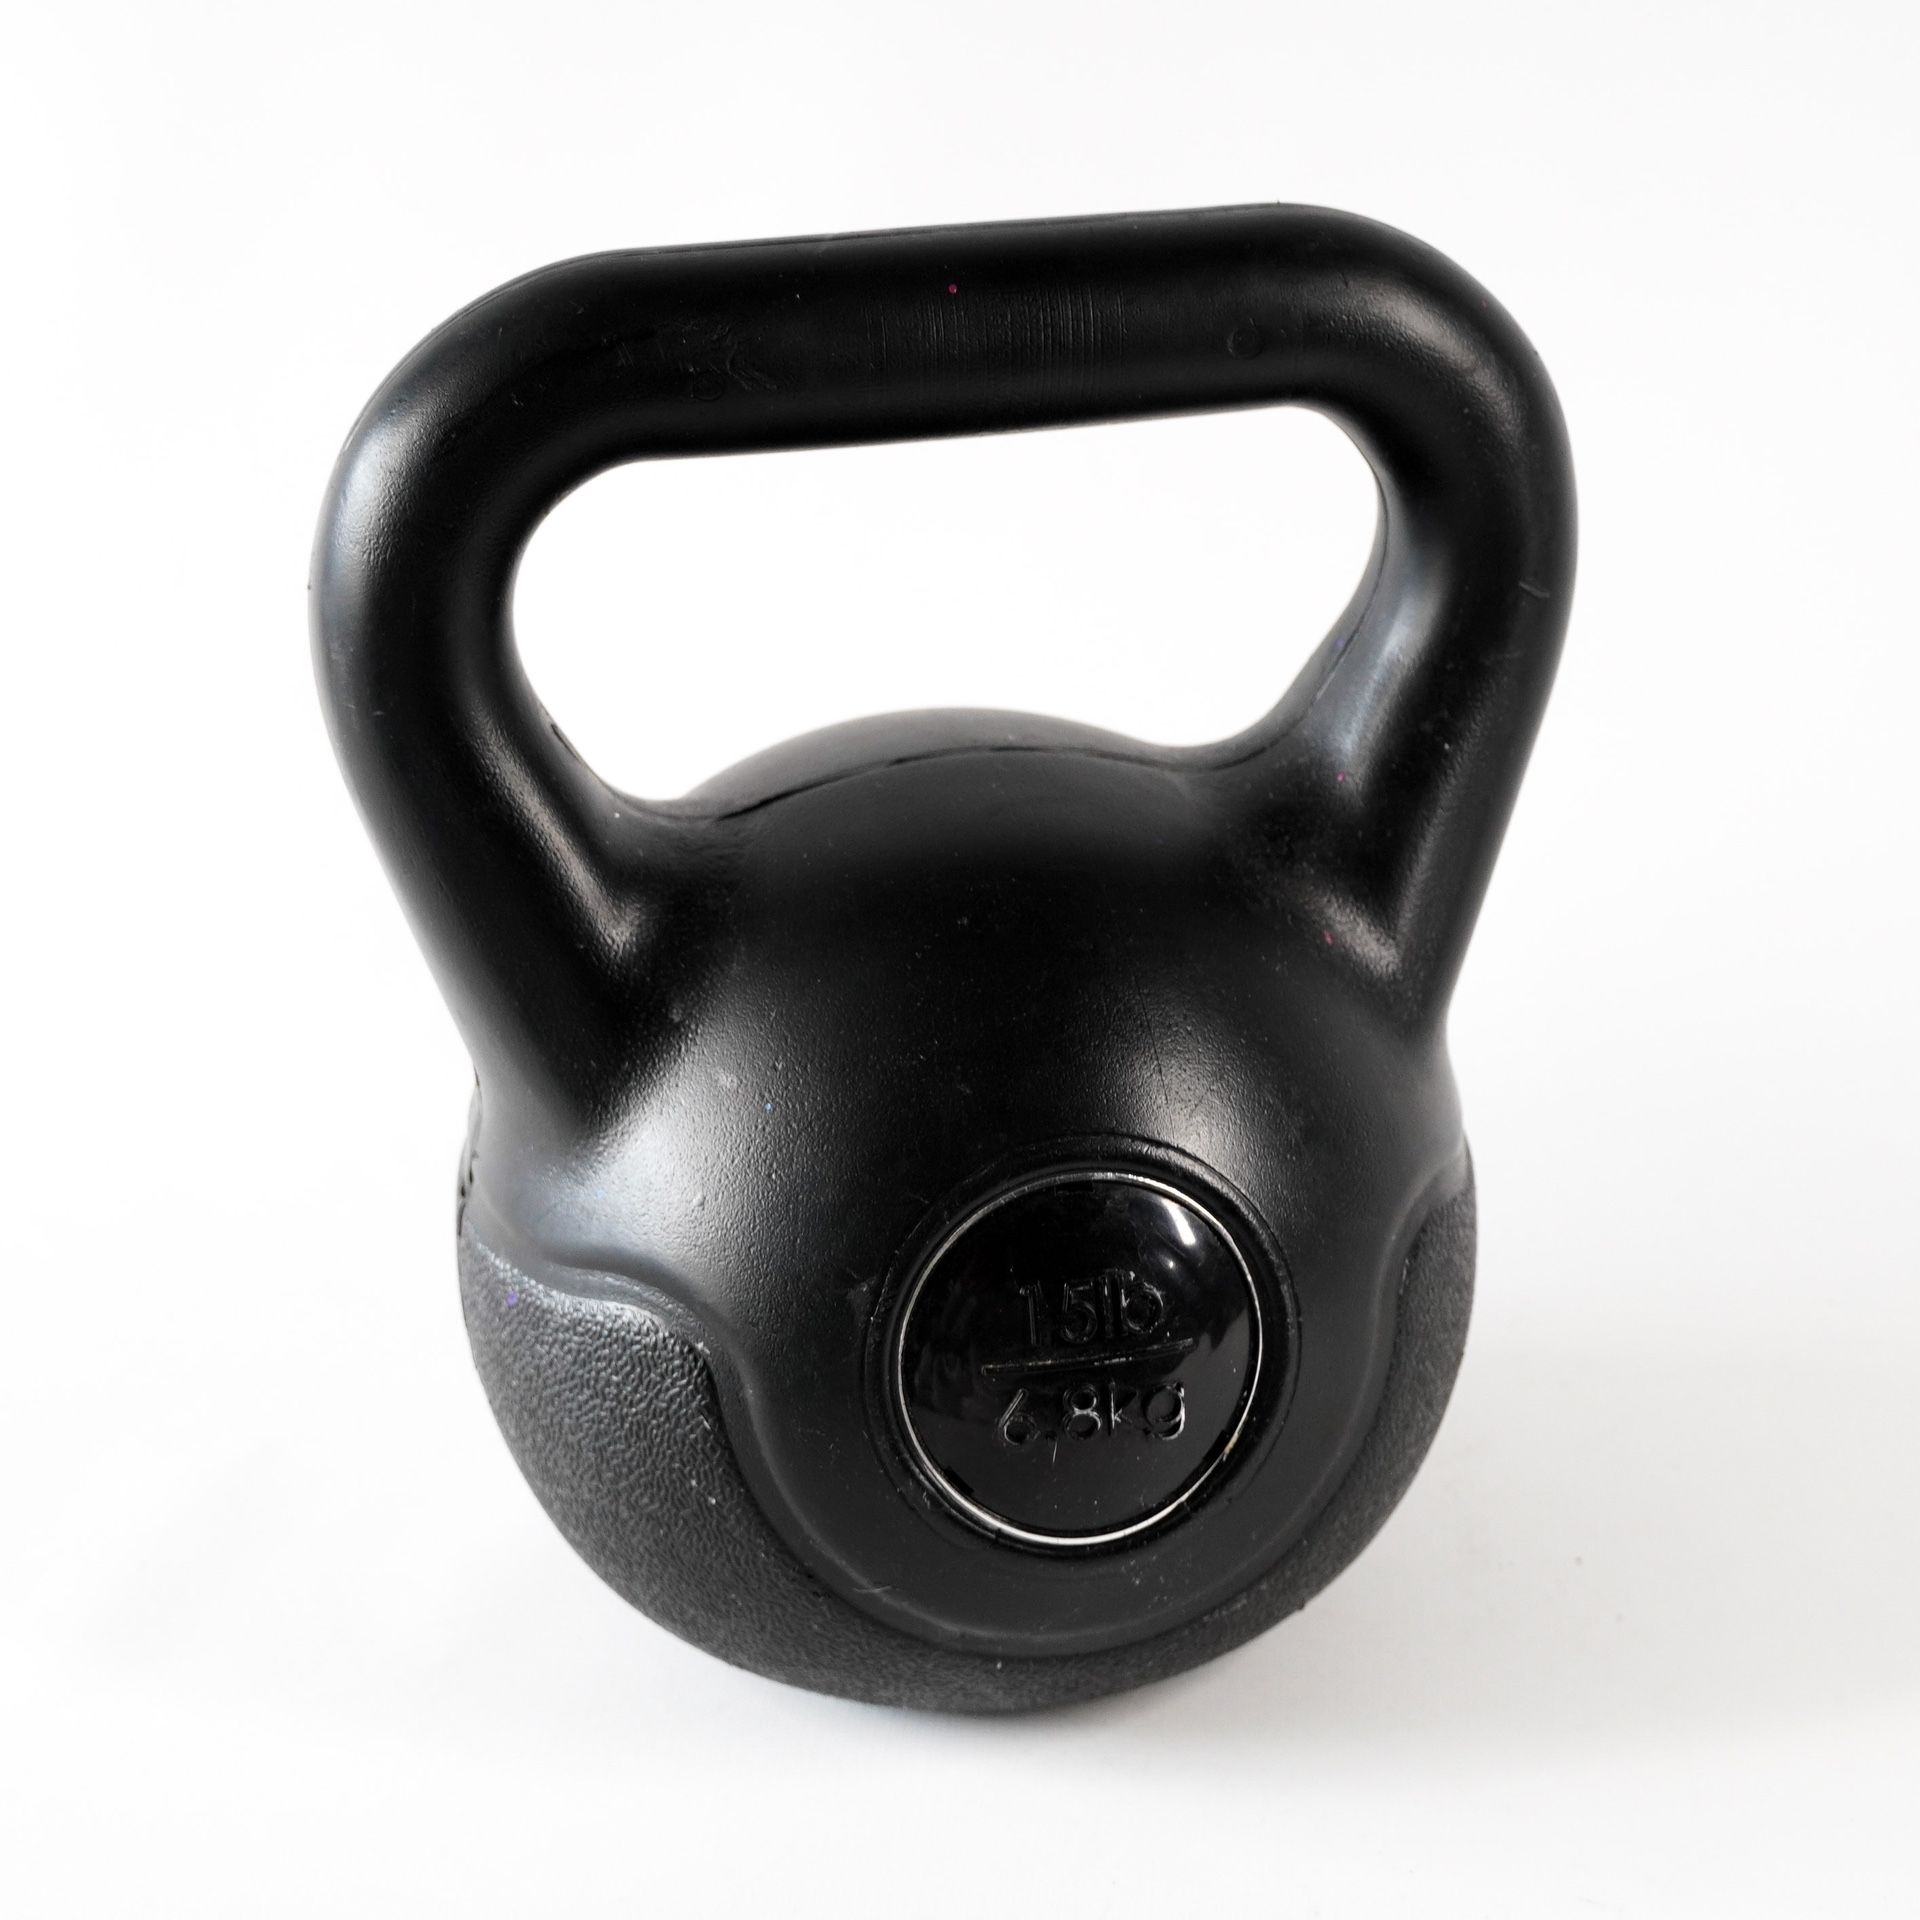 15lb Black Kettlebell Weight Exercise Equipment Fitness Gym Gear